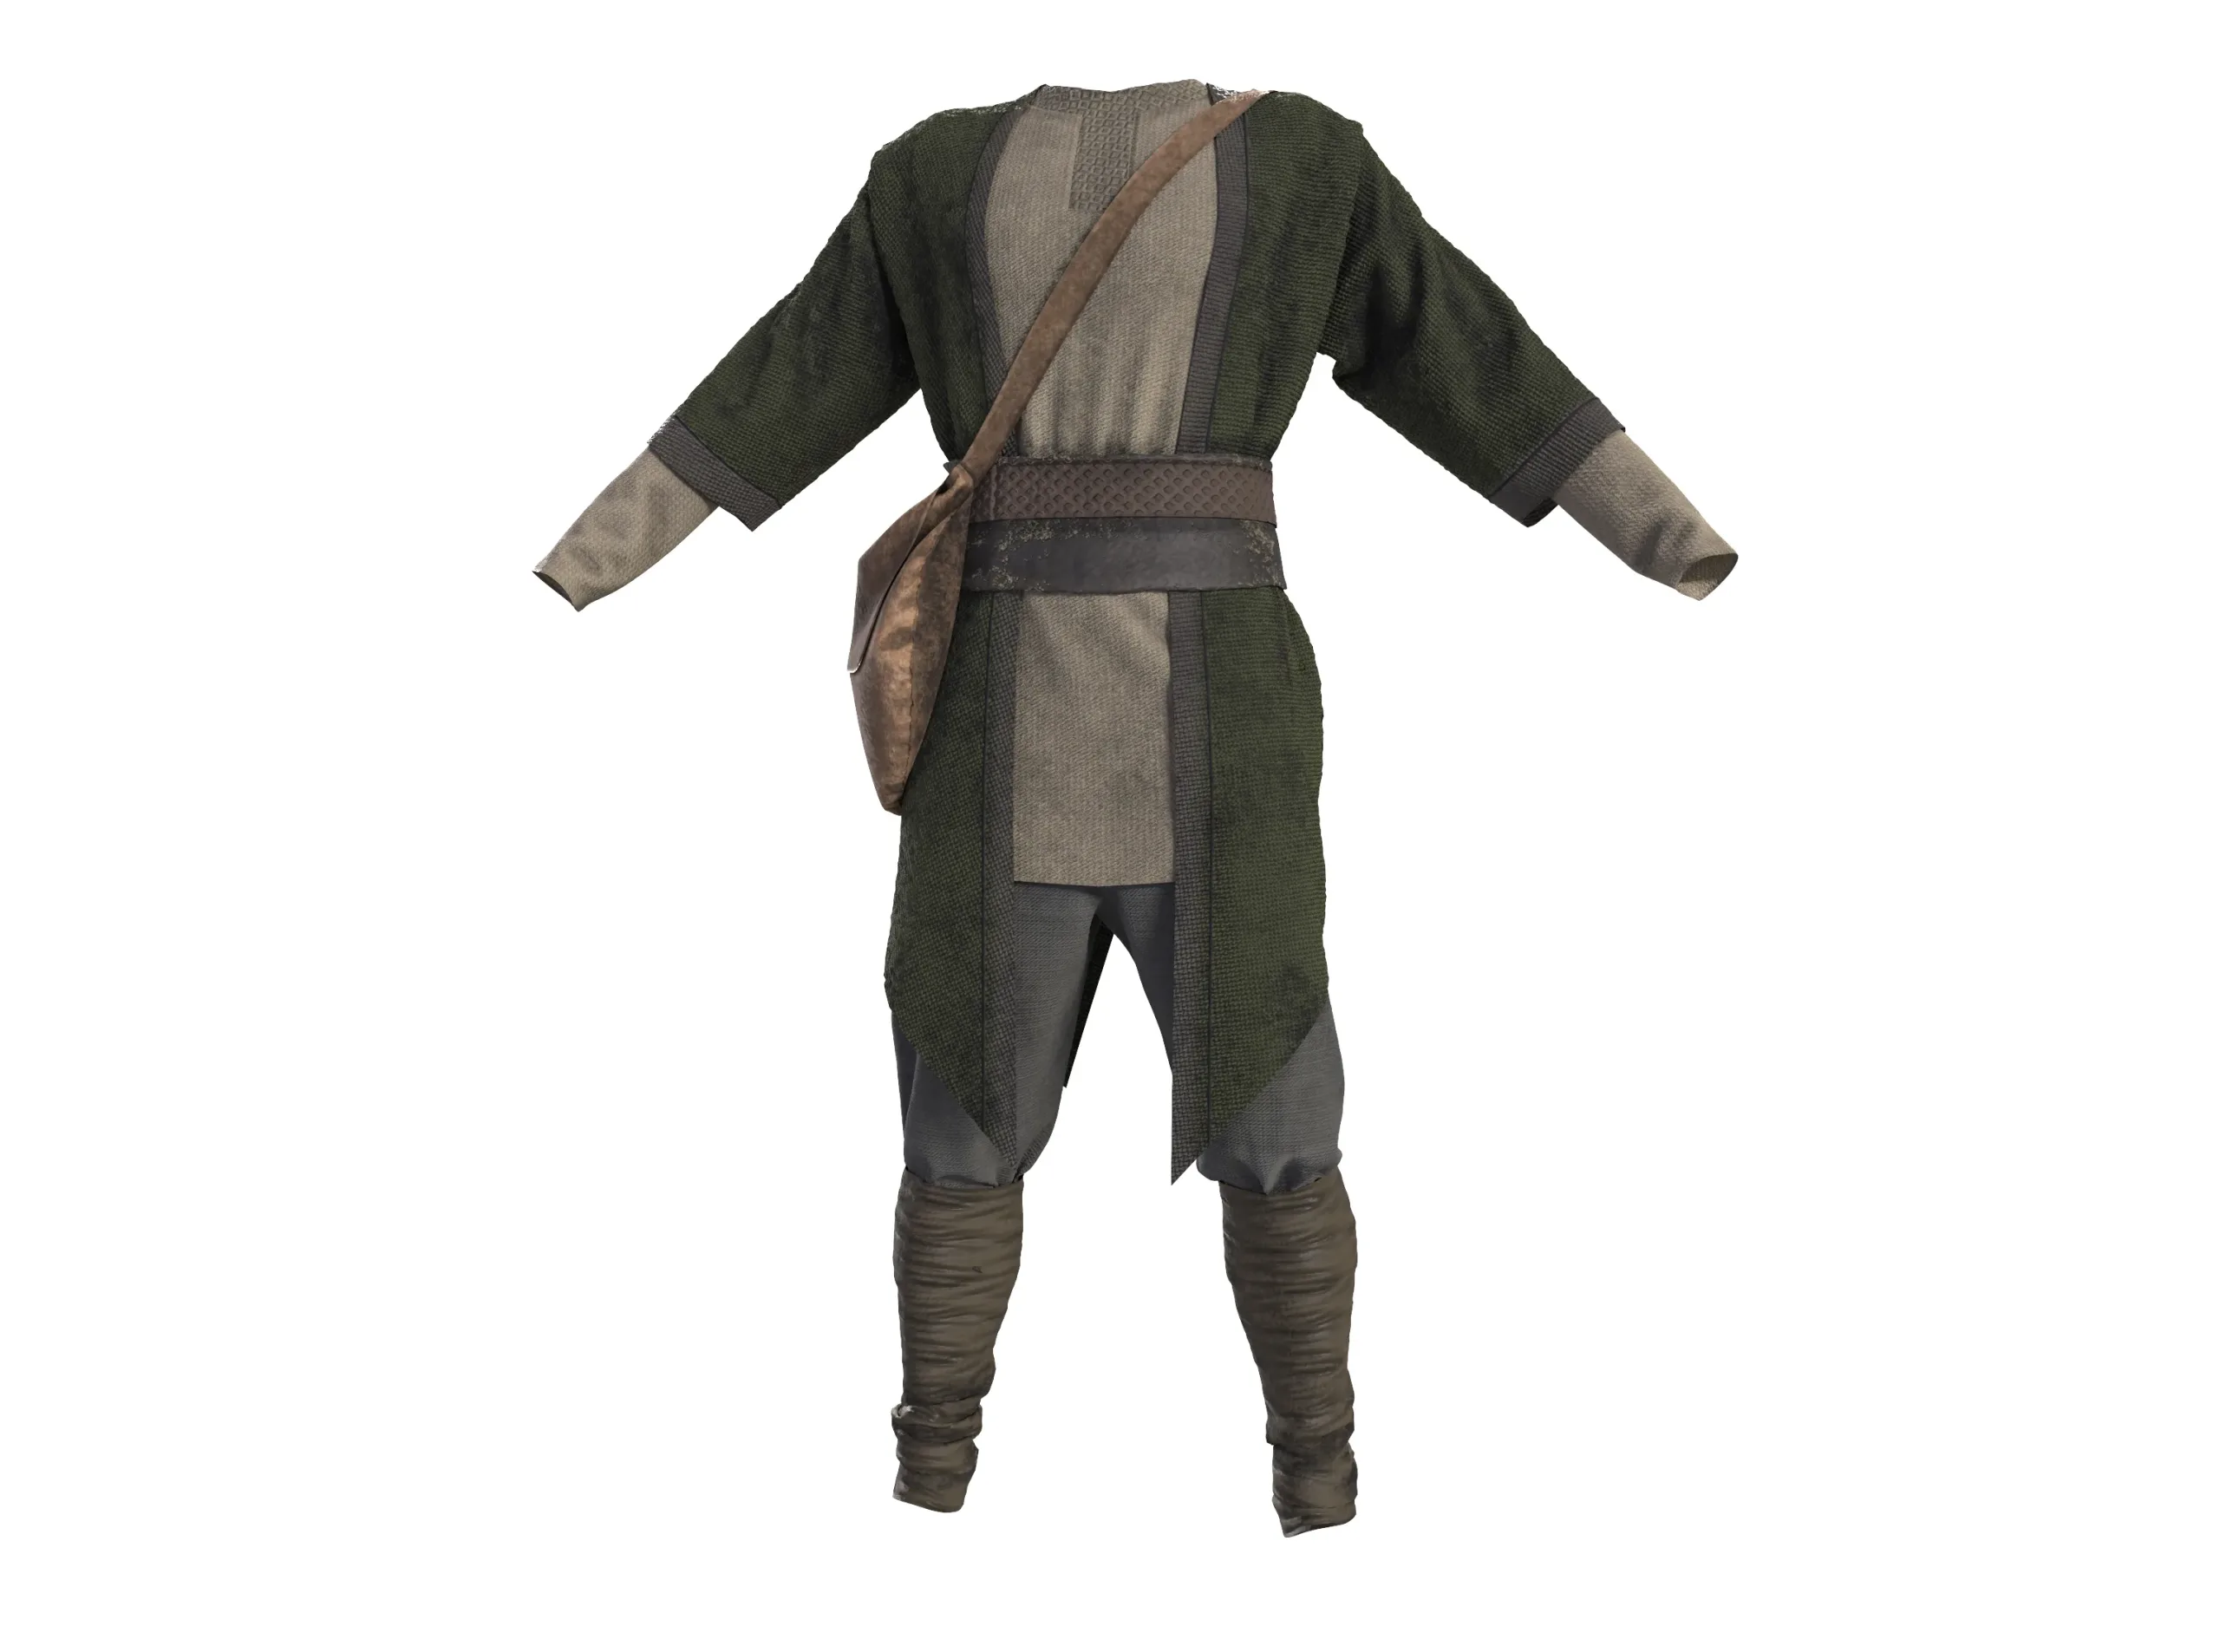 Farmer peasant clothes man outfit